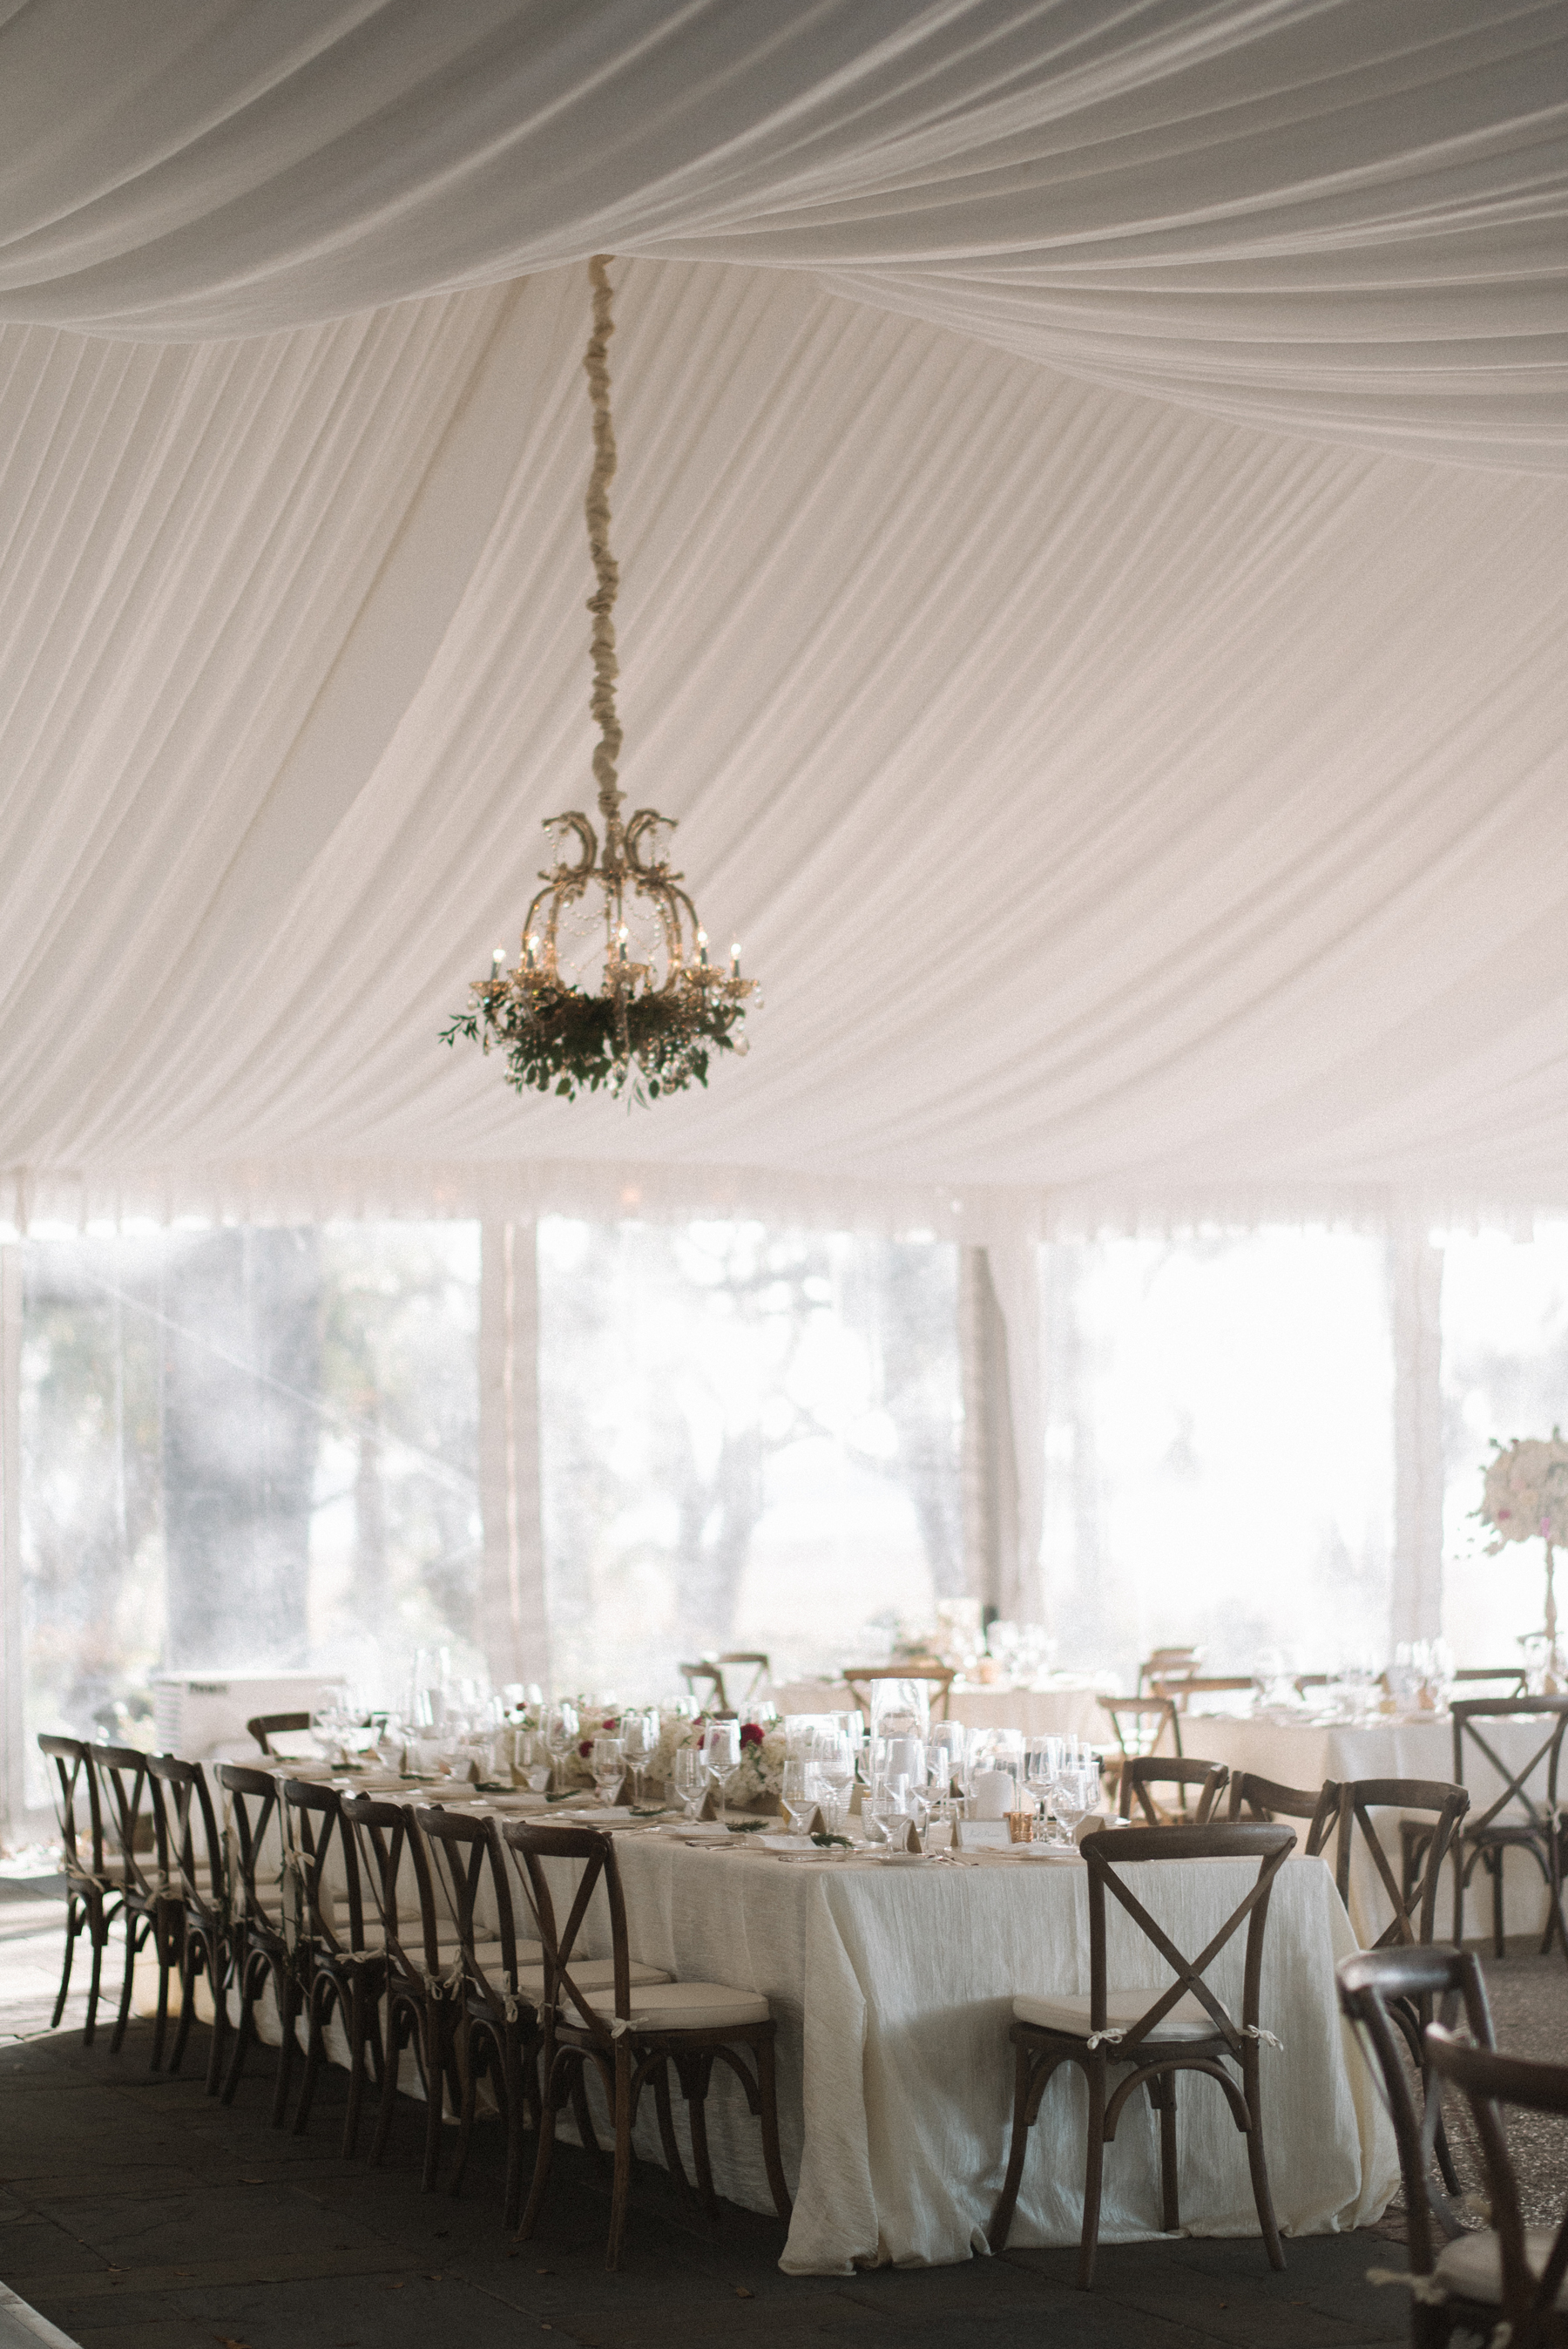 Elegant White and Gold Tent Wedding Reception